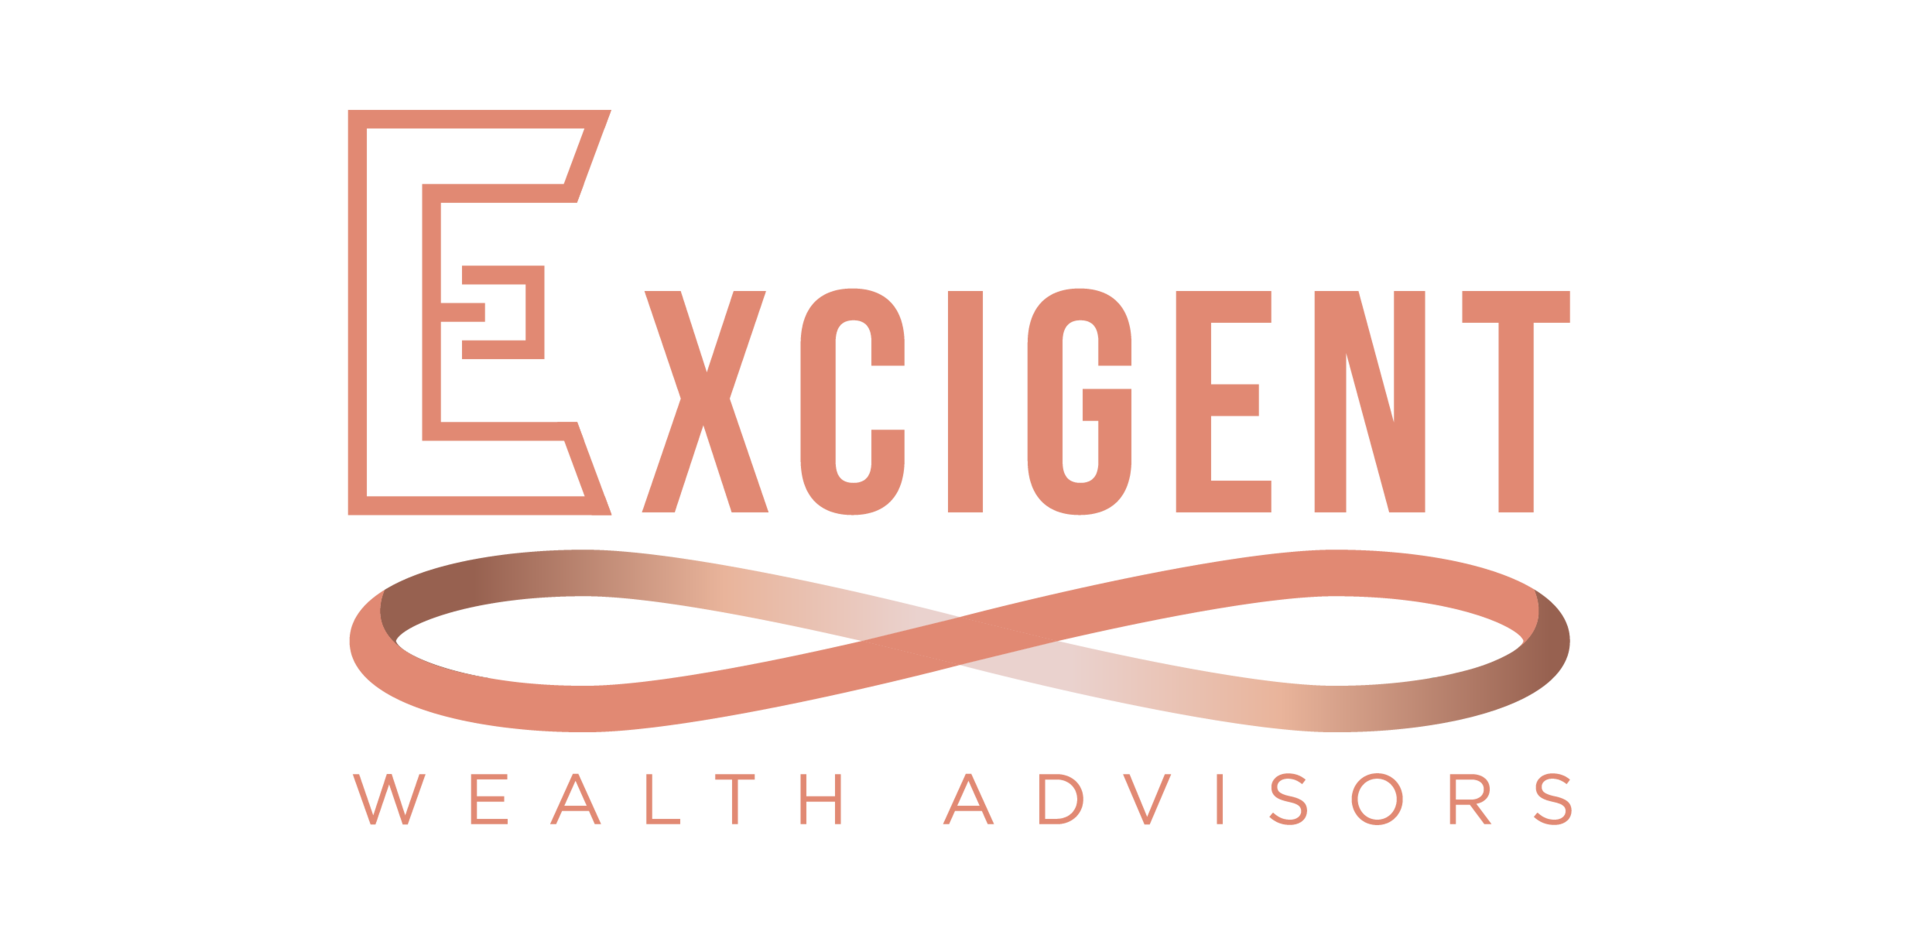 excigent-wealth-advisors